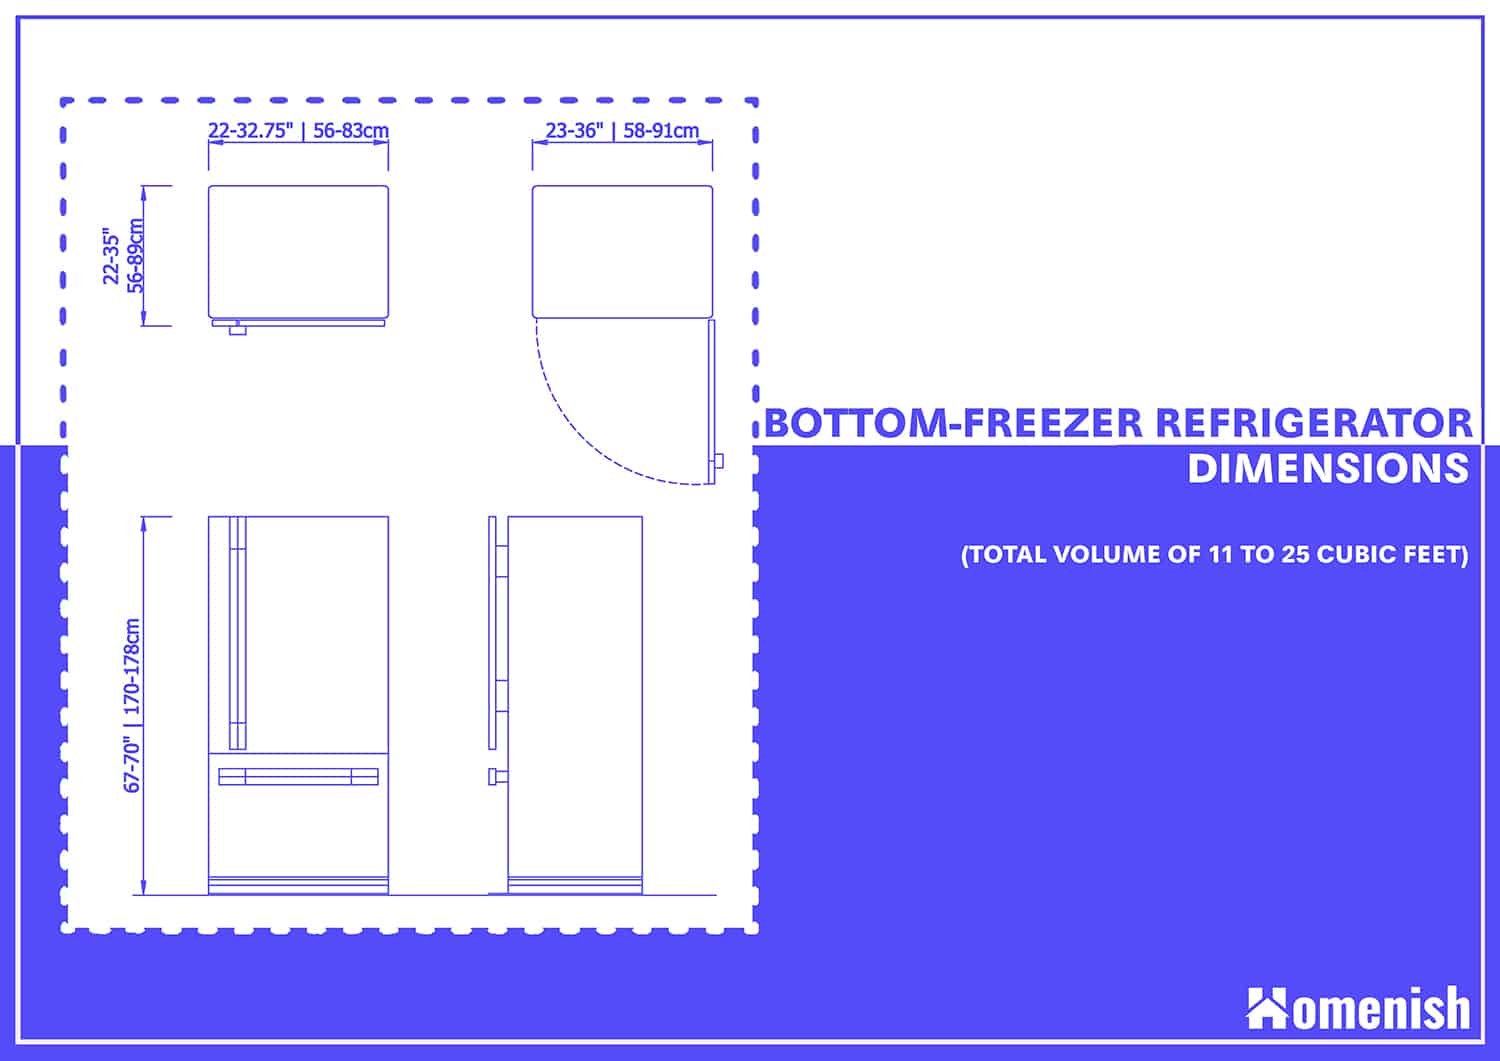 Bottom-freezer Refrigerator Dimensions